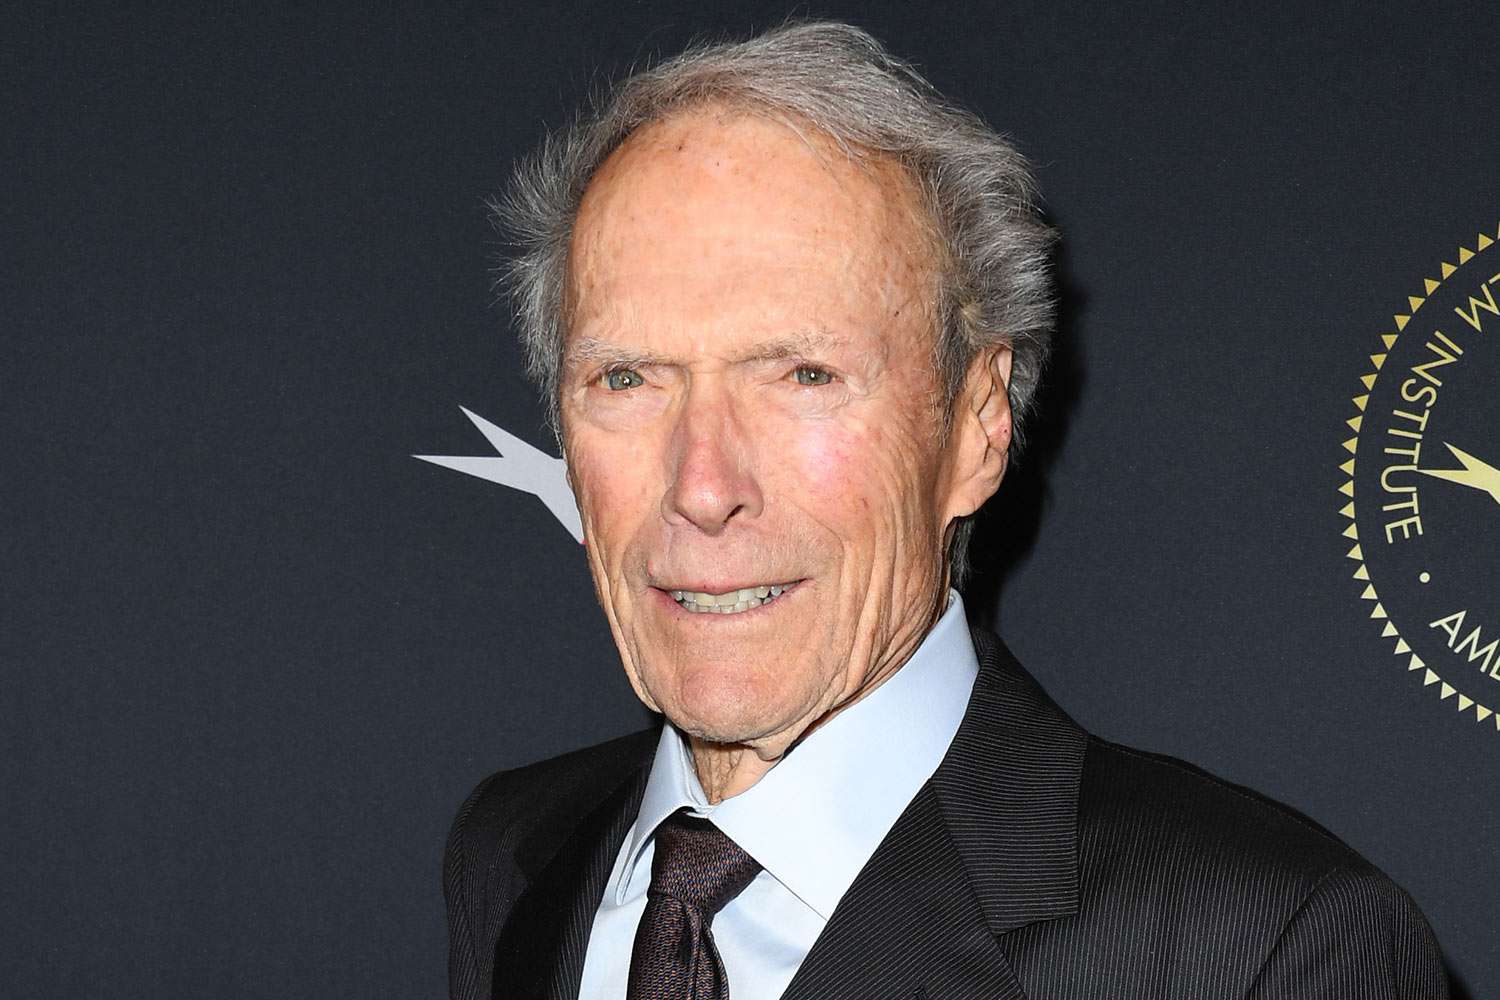 Clint Eastwood wearing a black suit